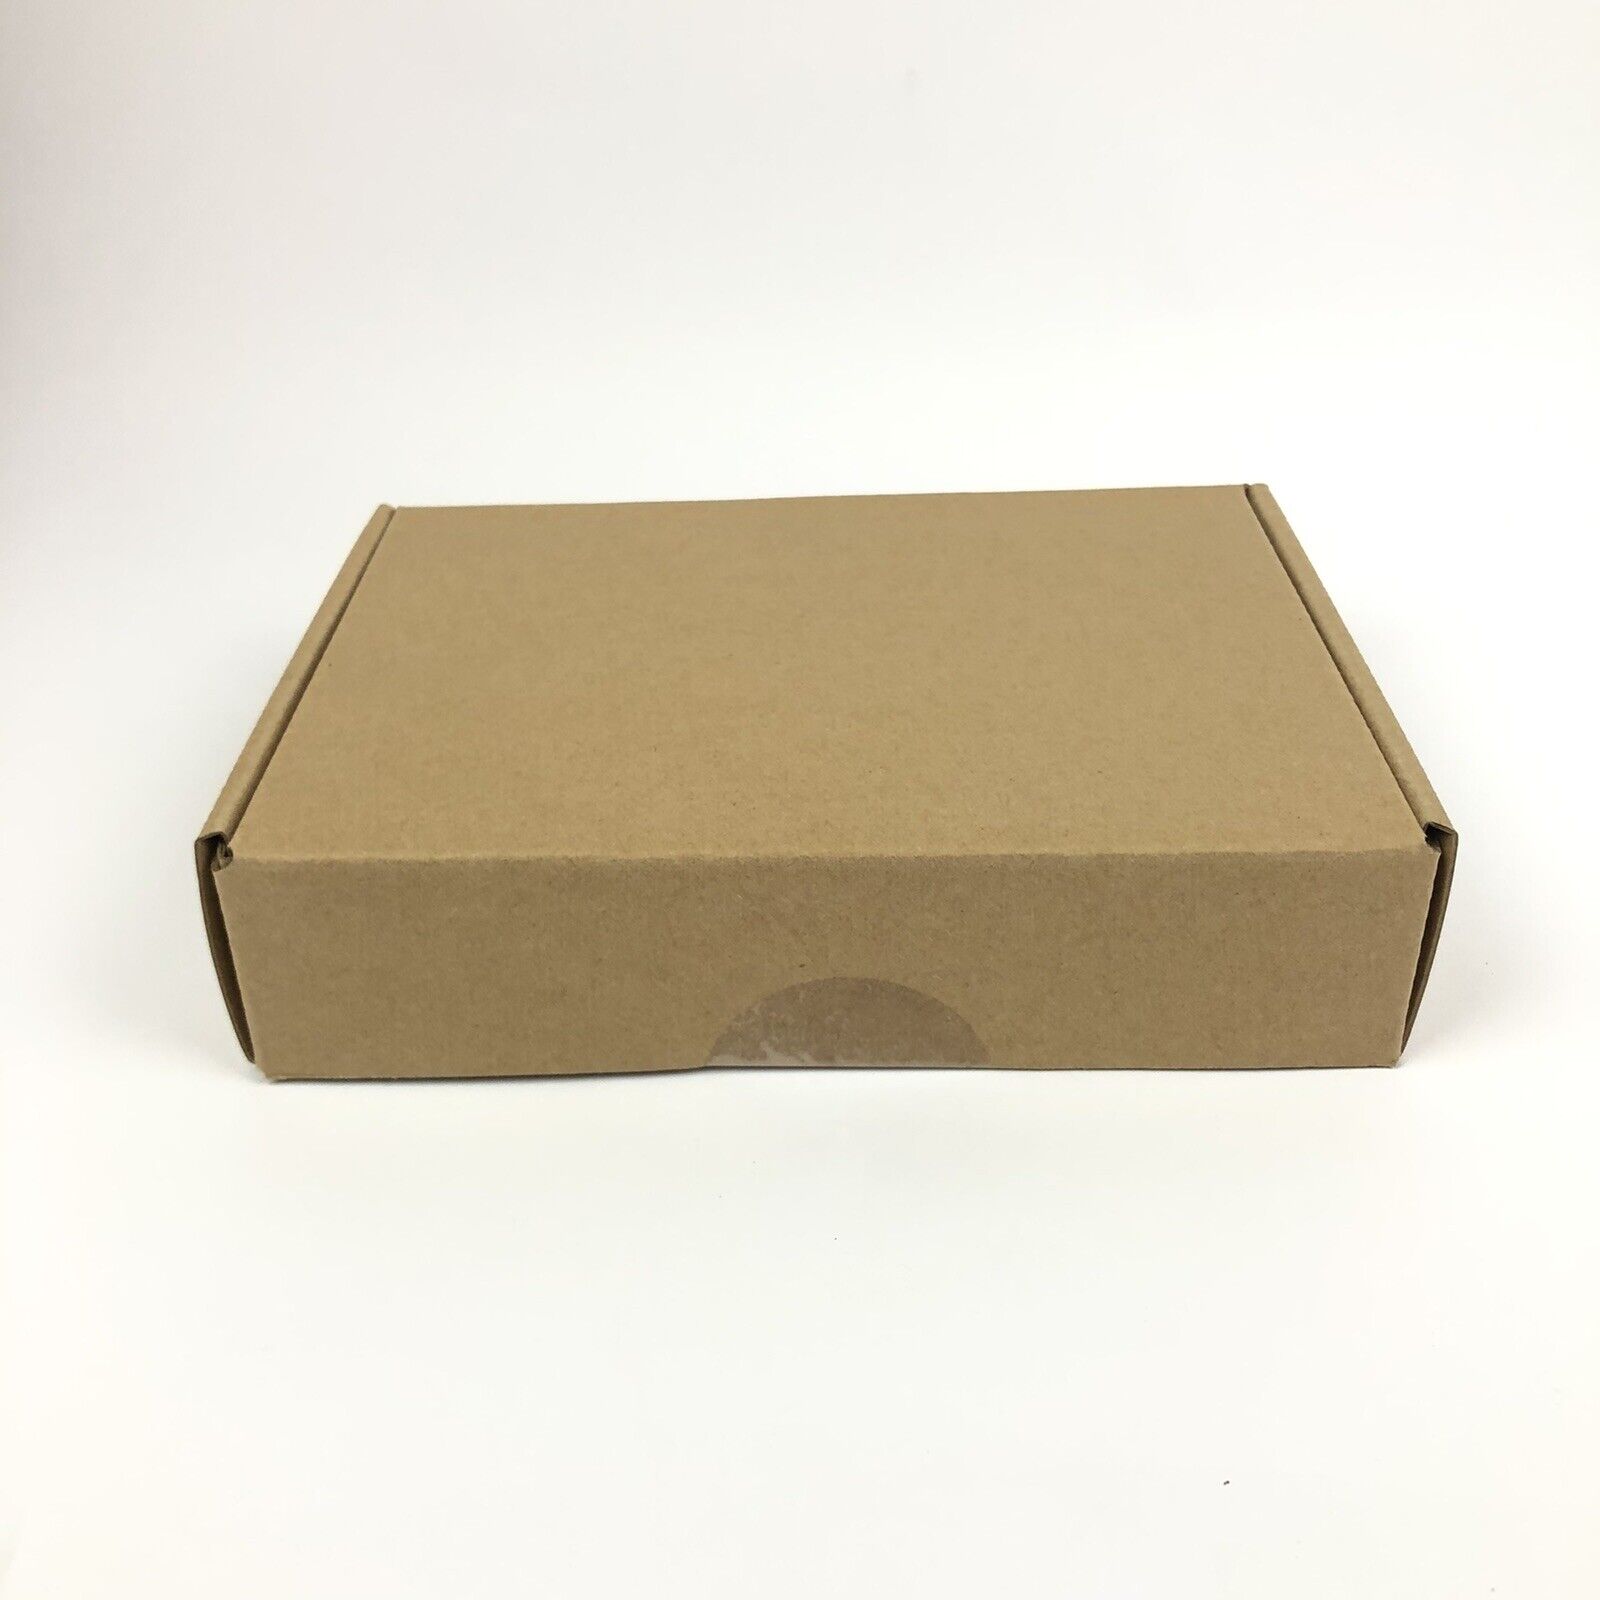 2 Google Fiber Jacks & Base GFLT110 NEW IN BOX SEALED From Manufacturer Google Fiber 86003010-07 - фотография #8